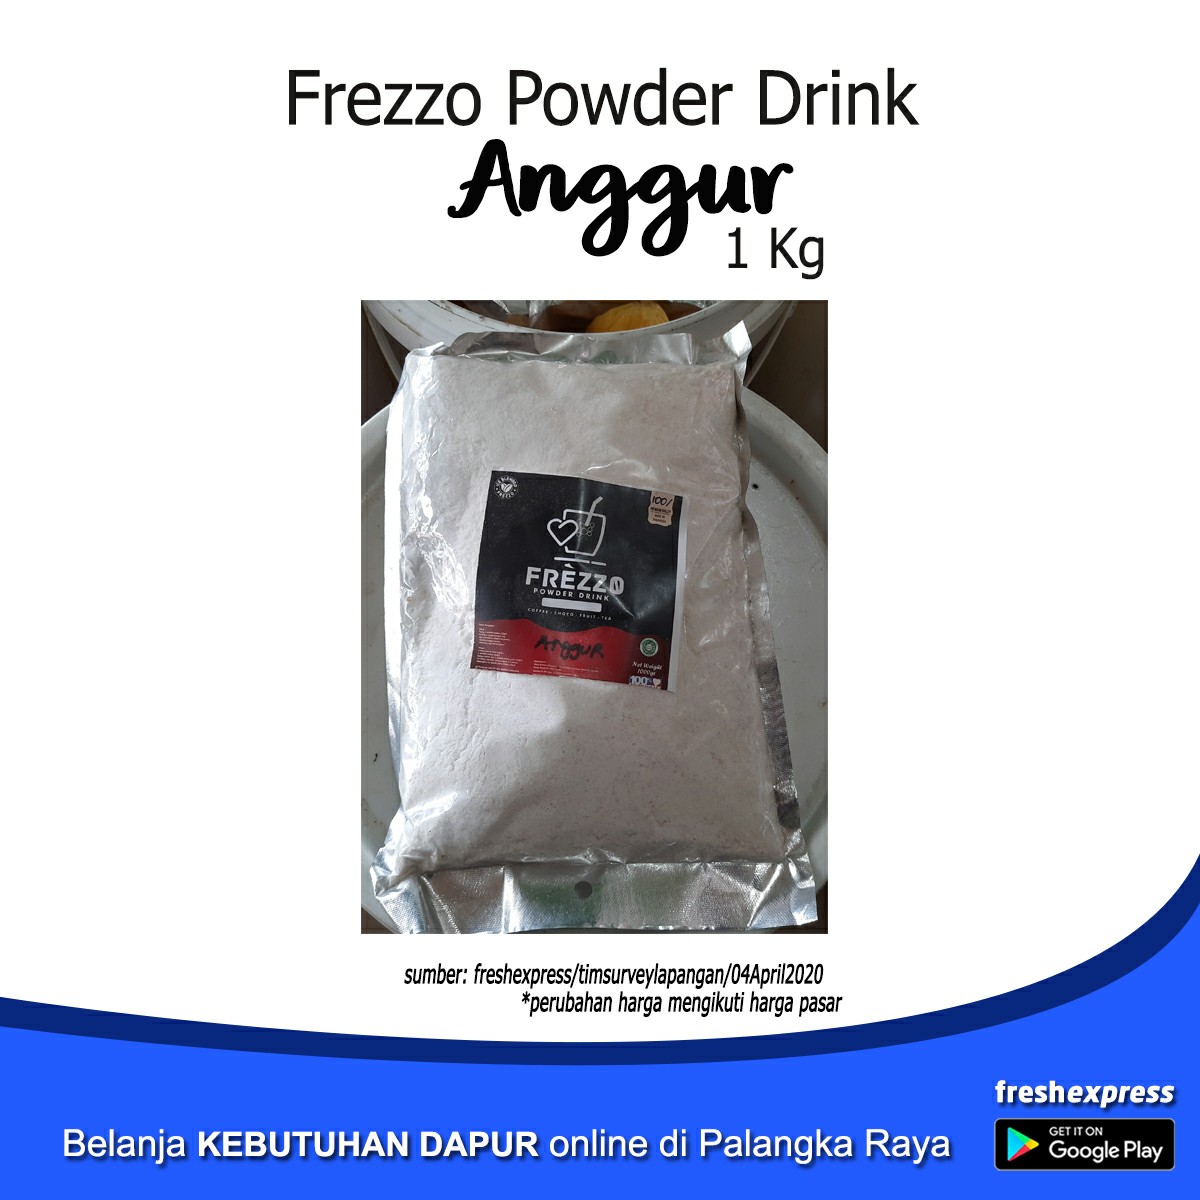 Frezzo Powder Drink - Anggur - 1 Kg